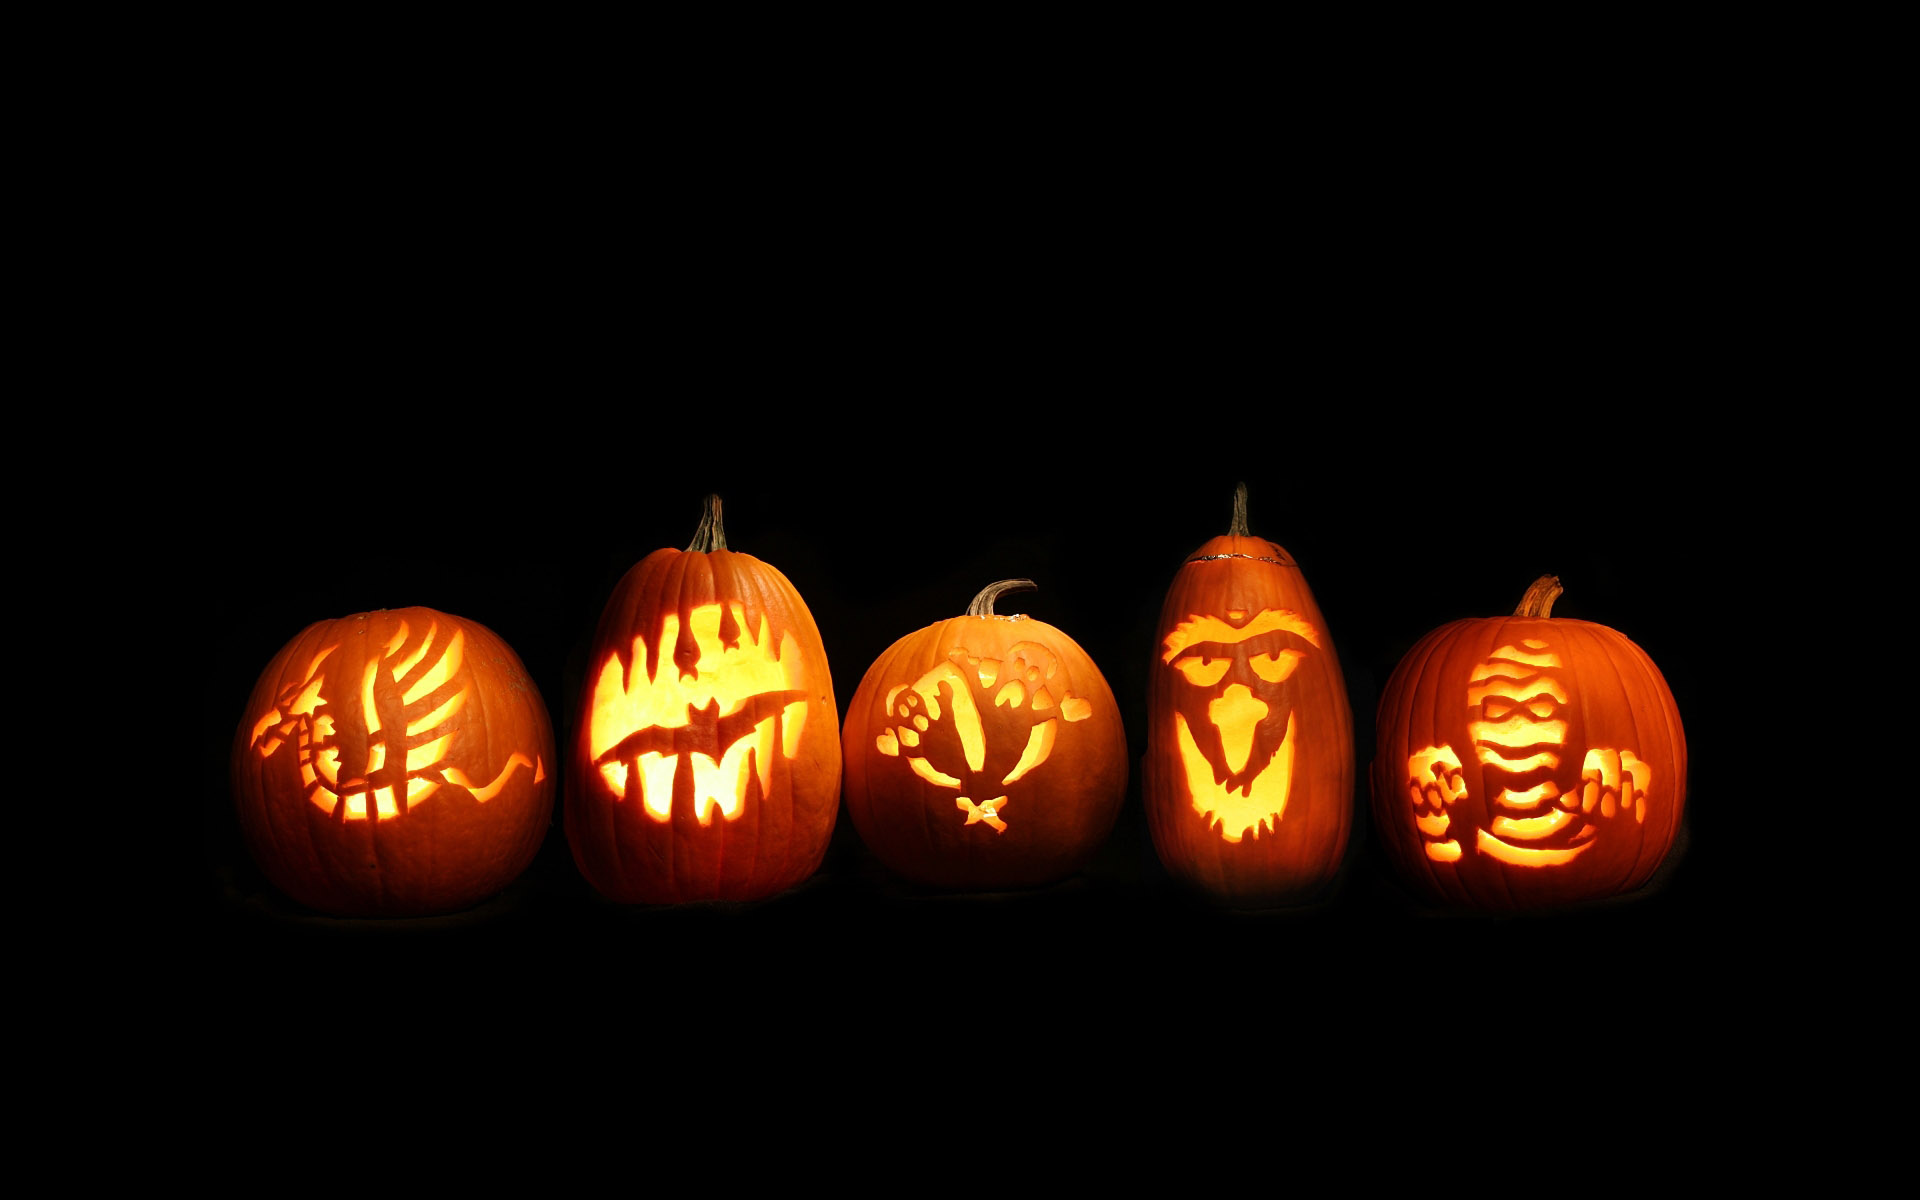 Halloween, Jack O Lantern, pumpkins - desktop wallpaper